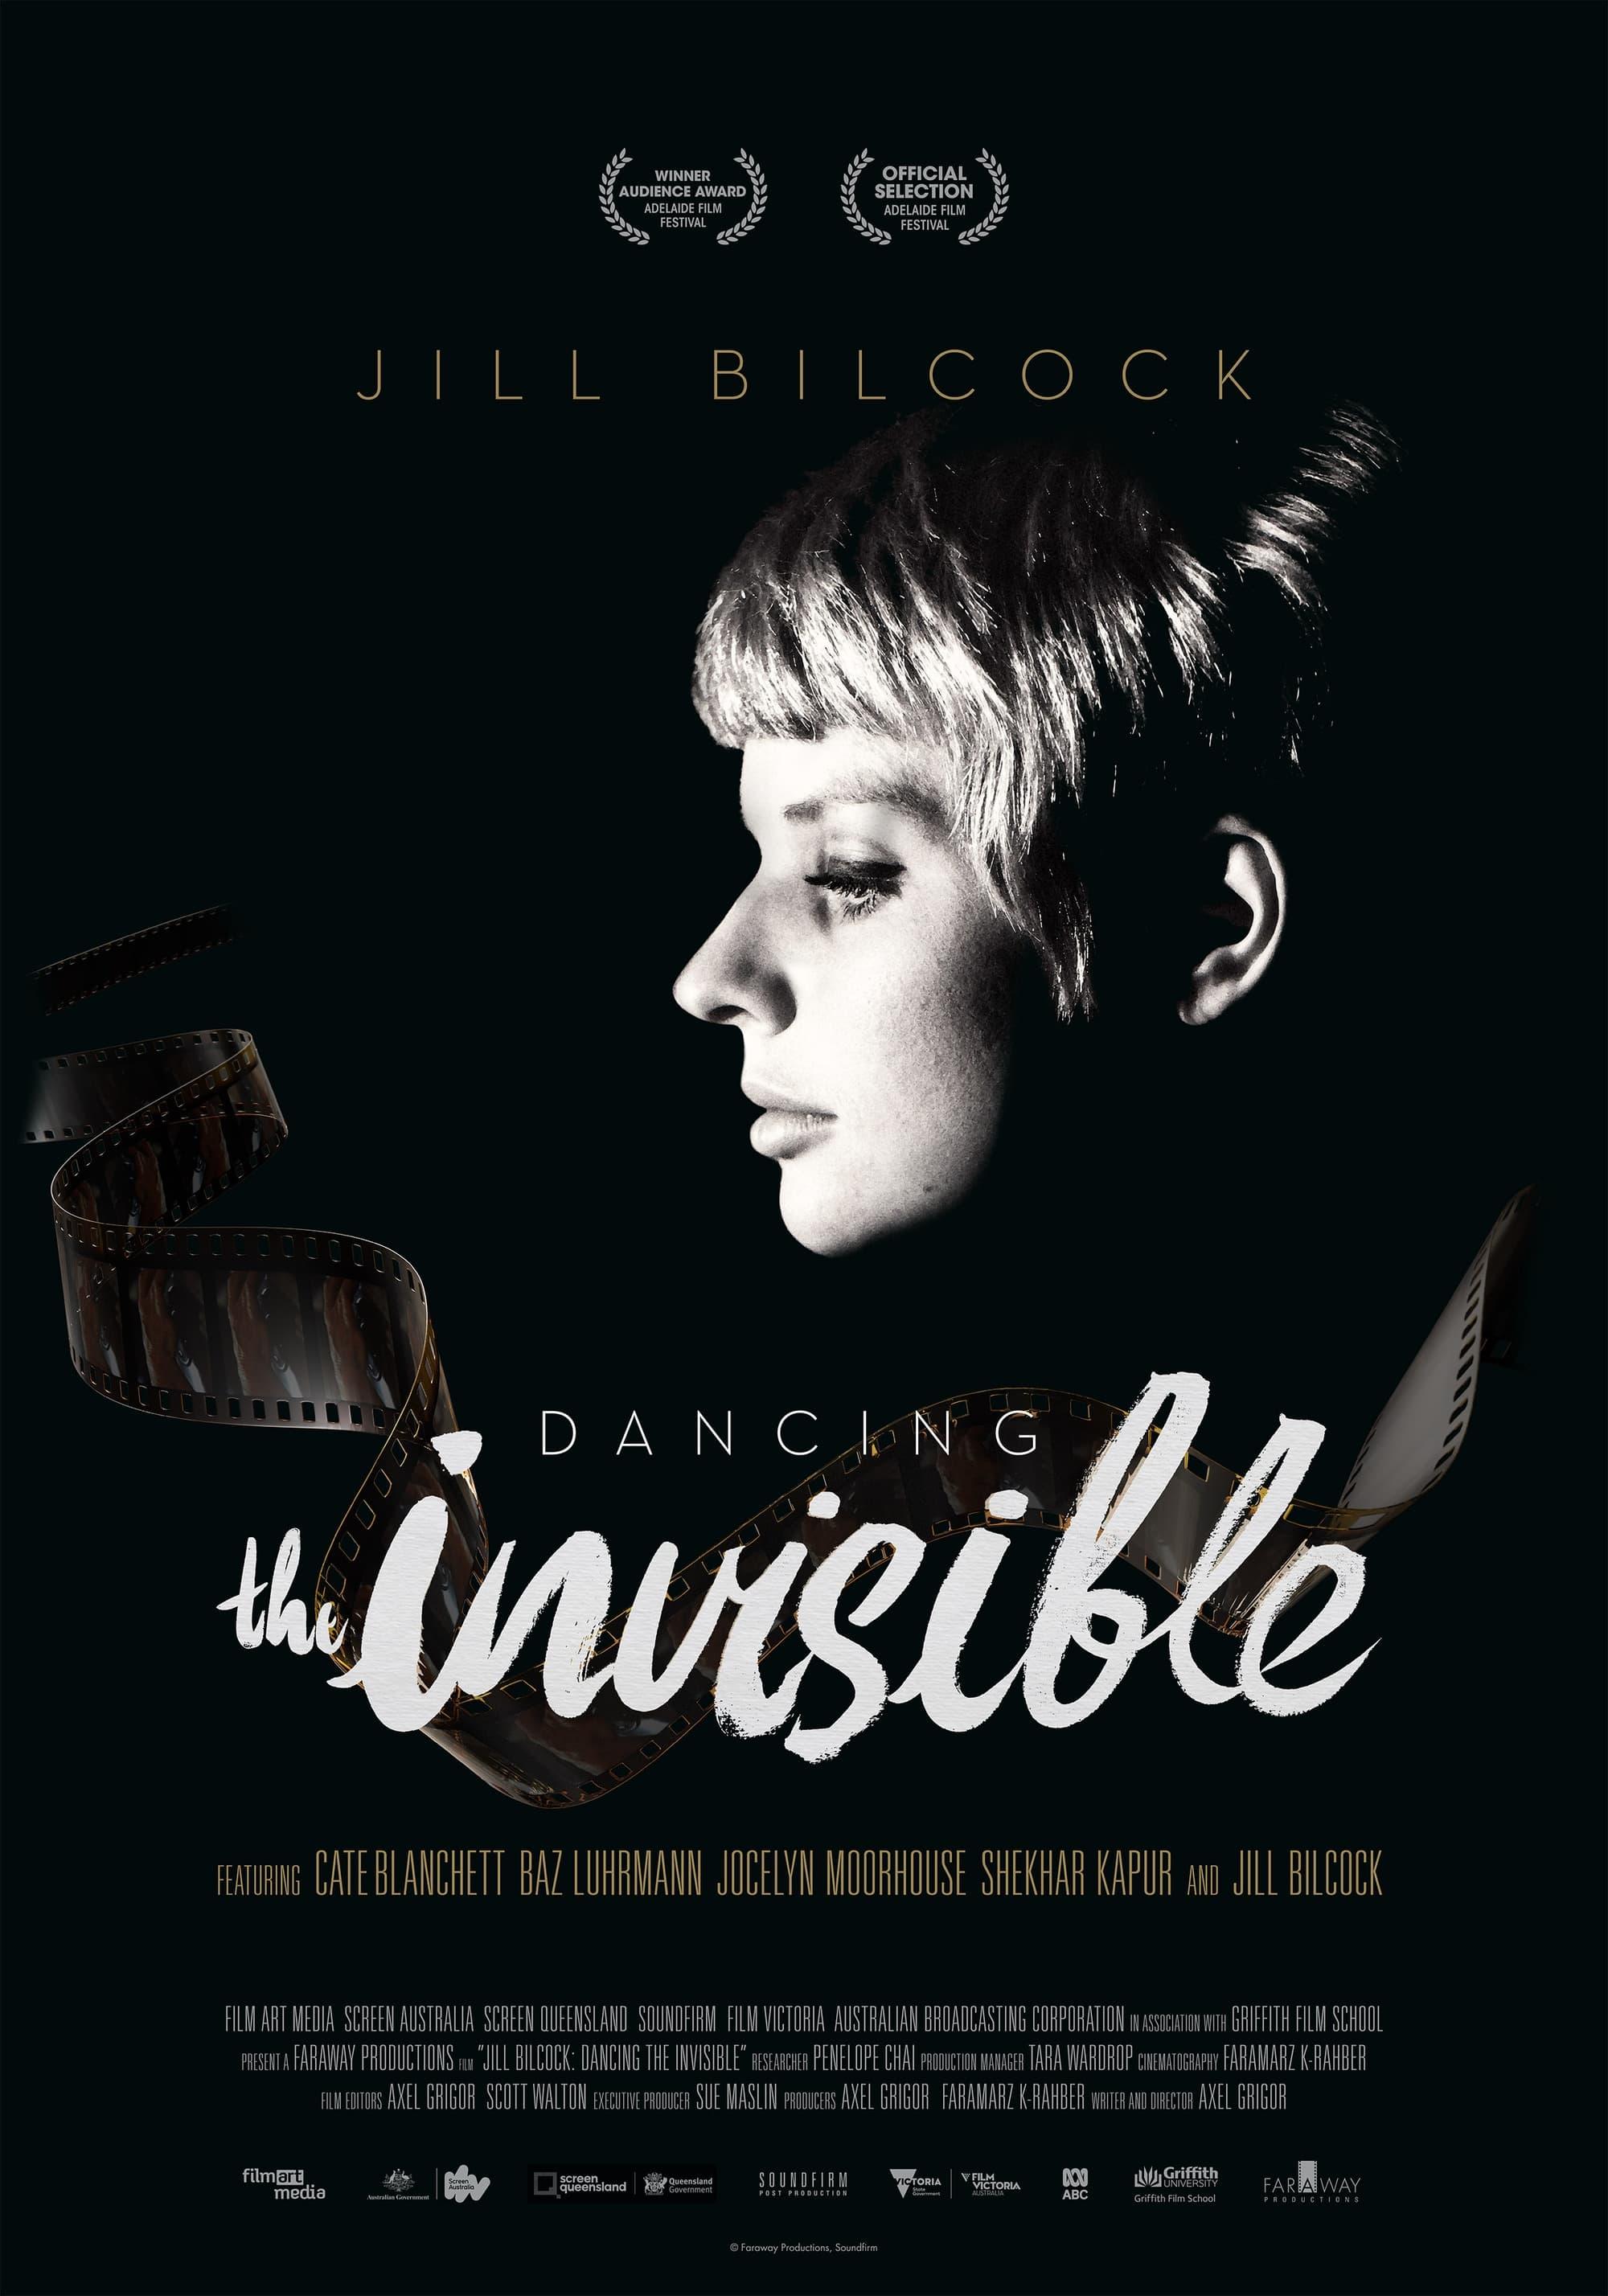 Jill Bilcock: Dancing the Invisible poster